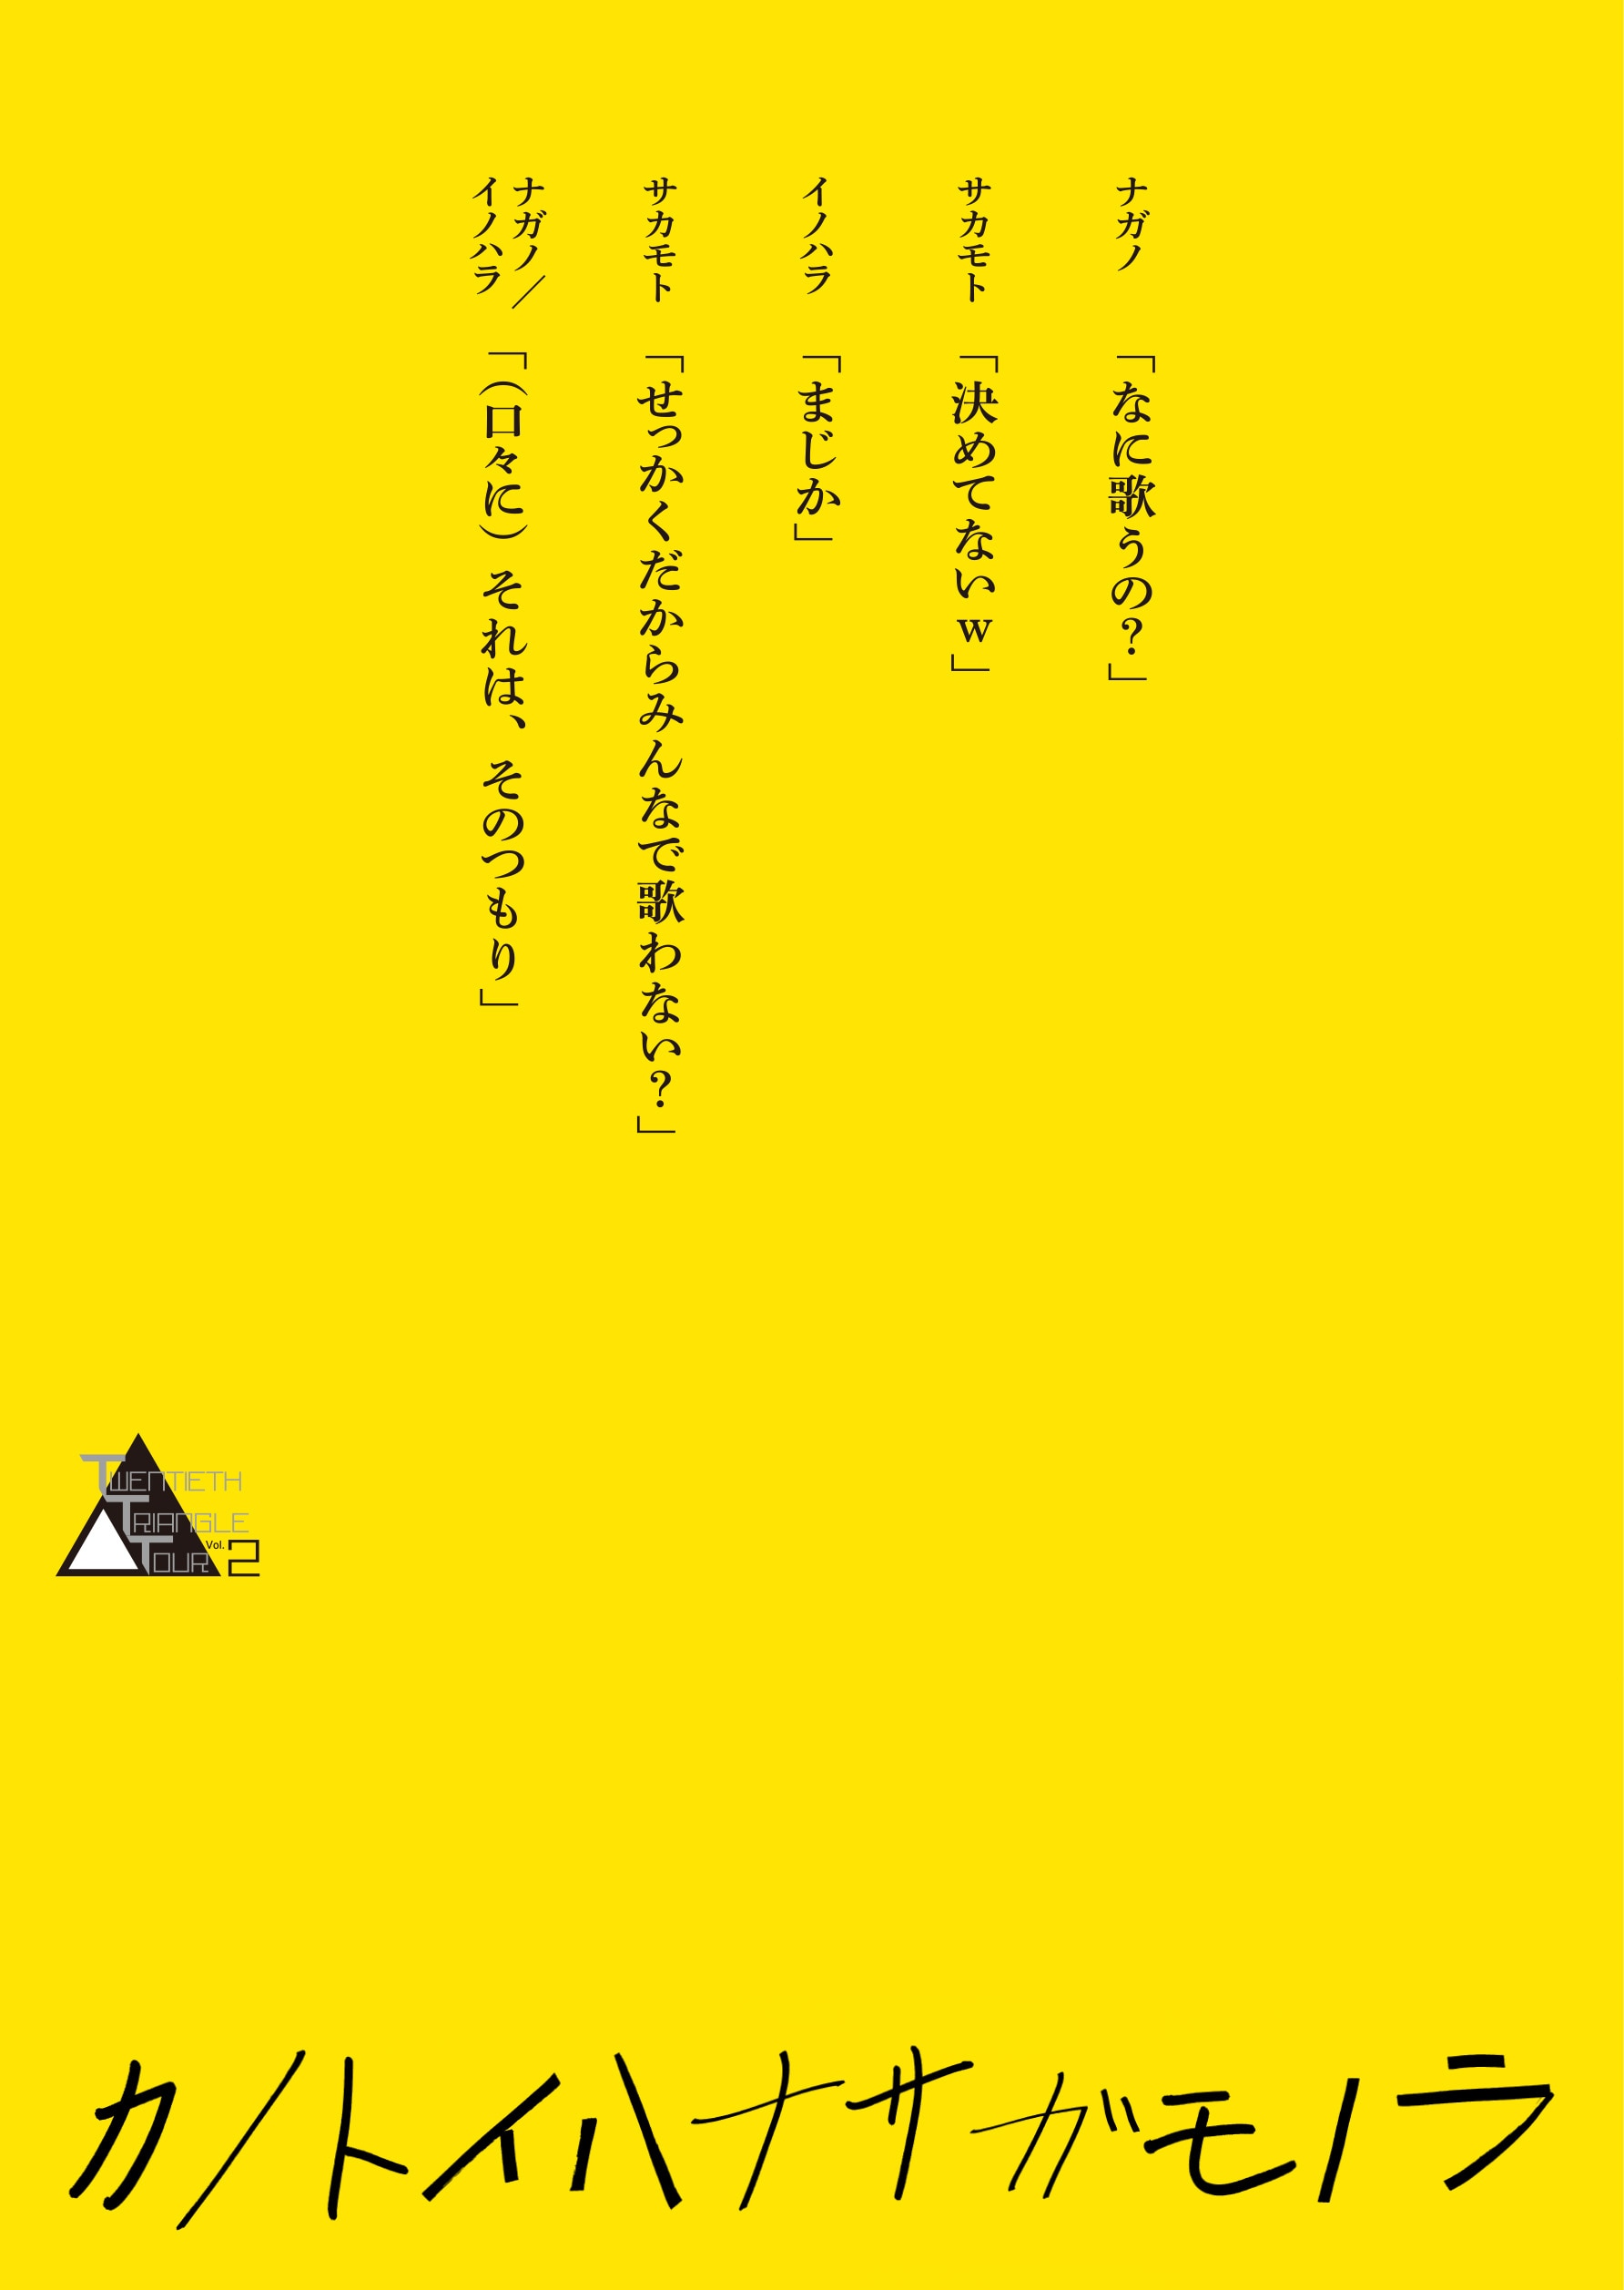 TWENTIETH TRIANGLE TOUR vol.2 カノトイハナサガモノラ【初回盤】(Blu-ray)